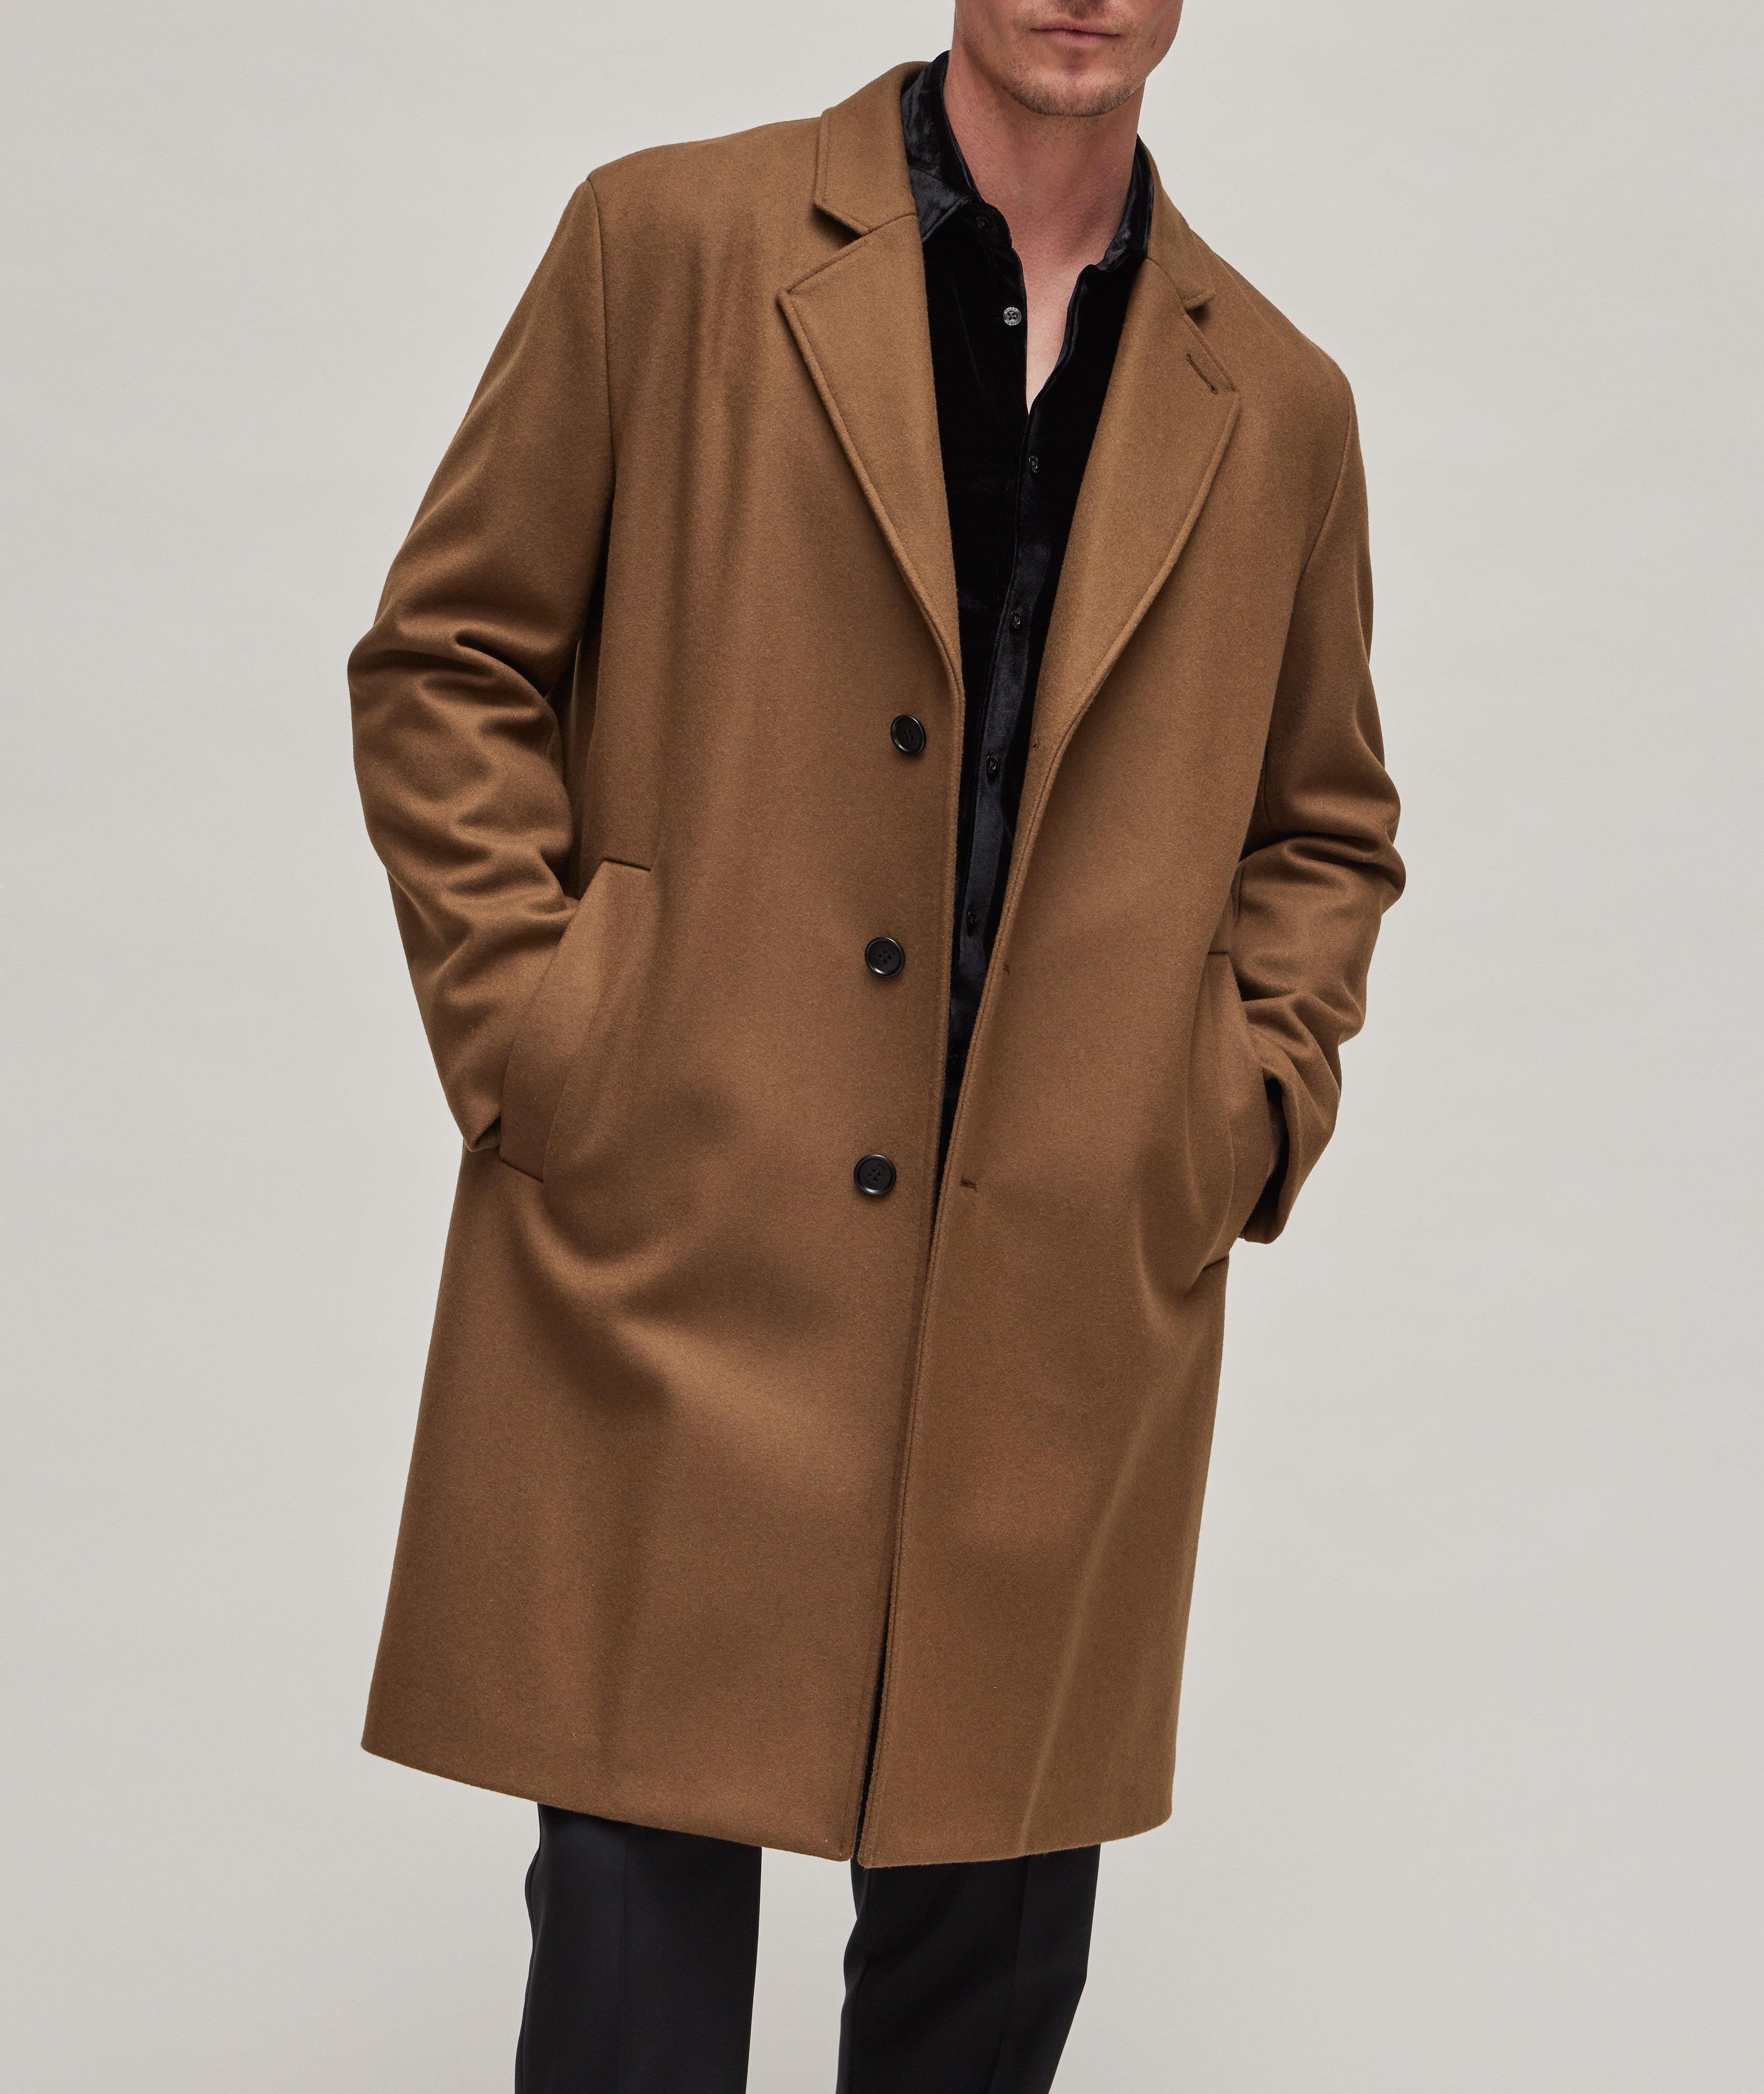 Malox Wool-Blend Overcoat image 1